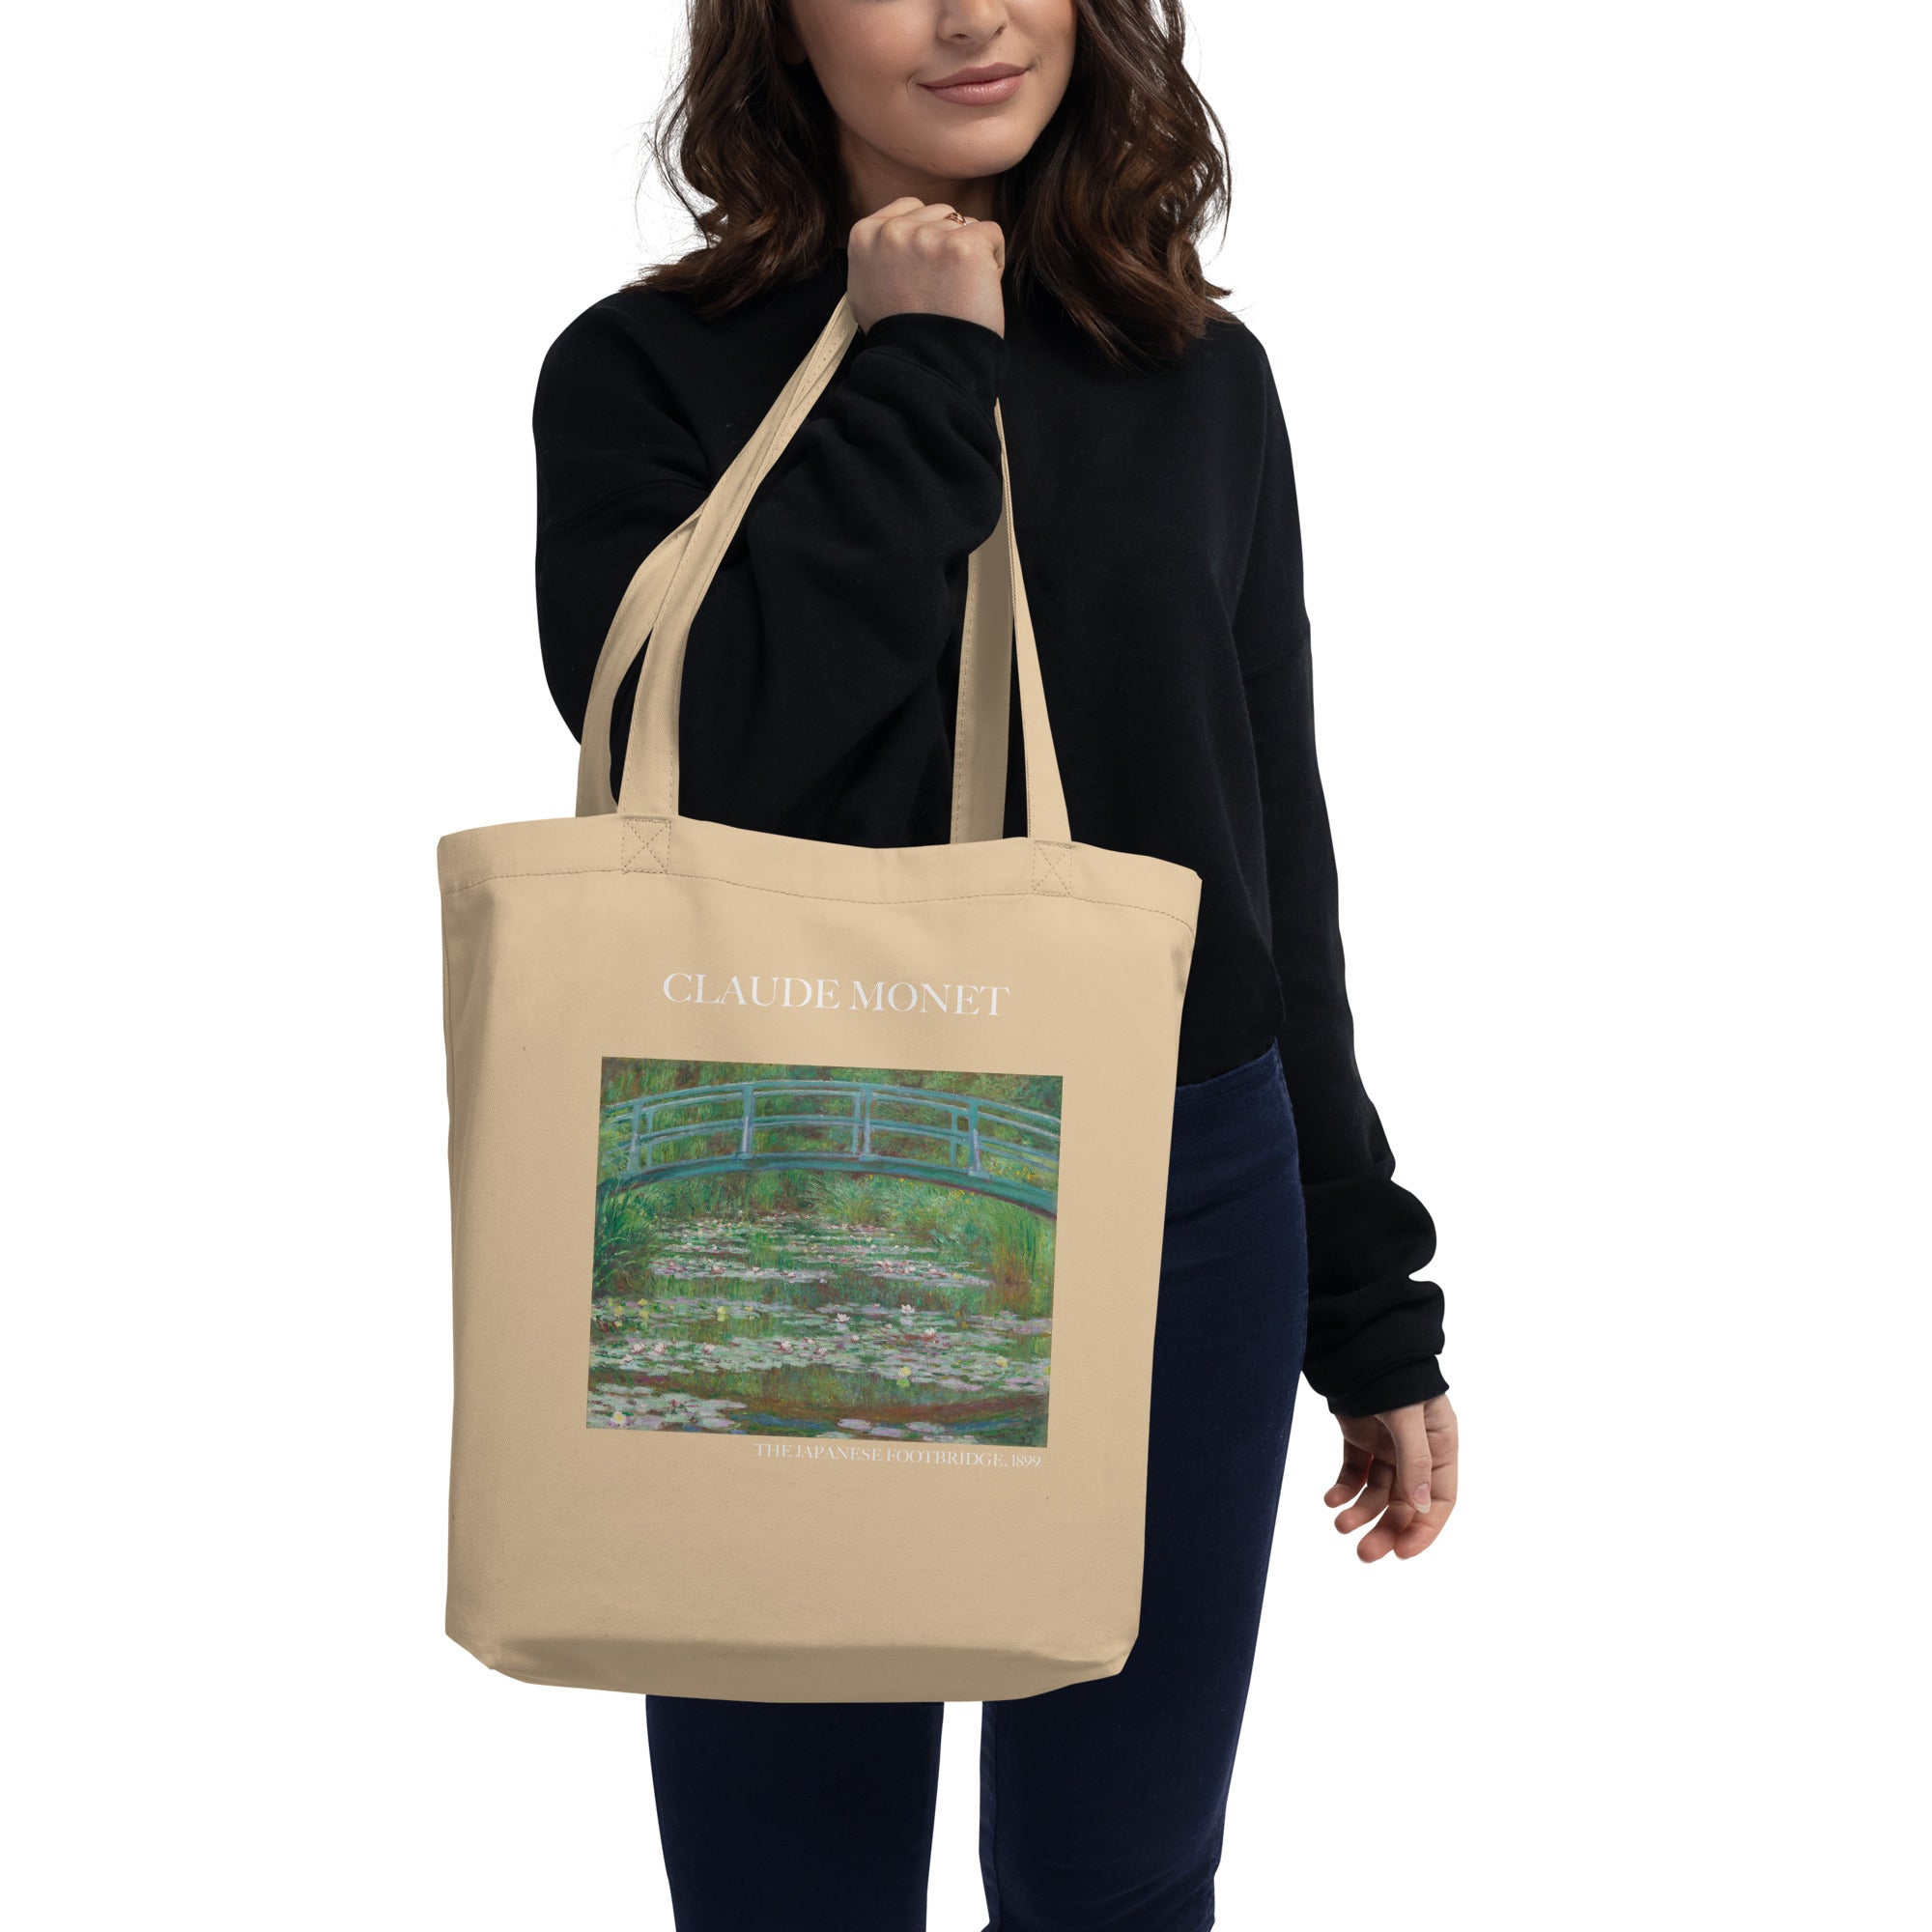 Claude Monet 'The Japanese Footbridge' Famous Painting Totebag | Eco Friendly Art Tote Bag